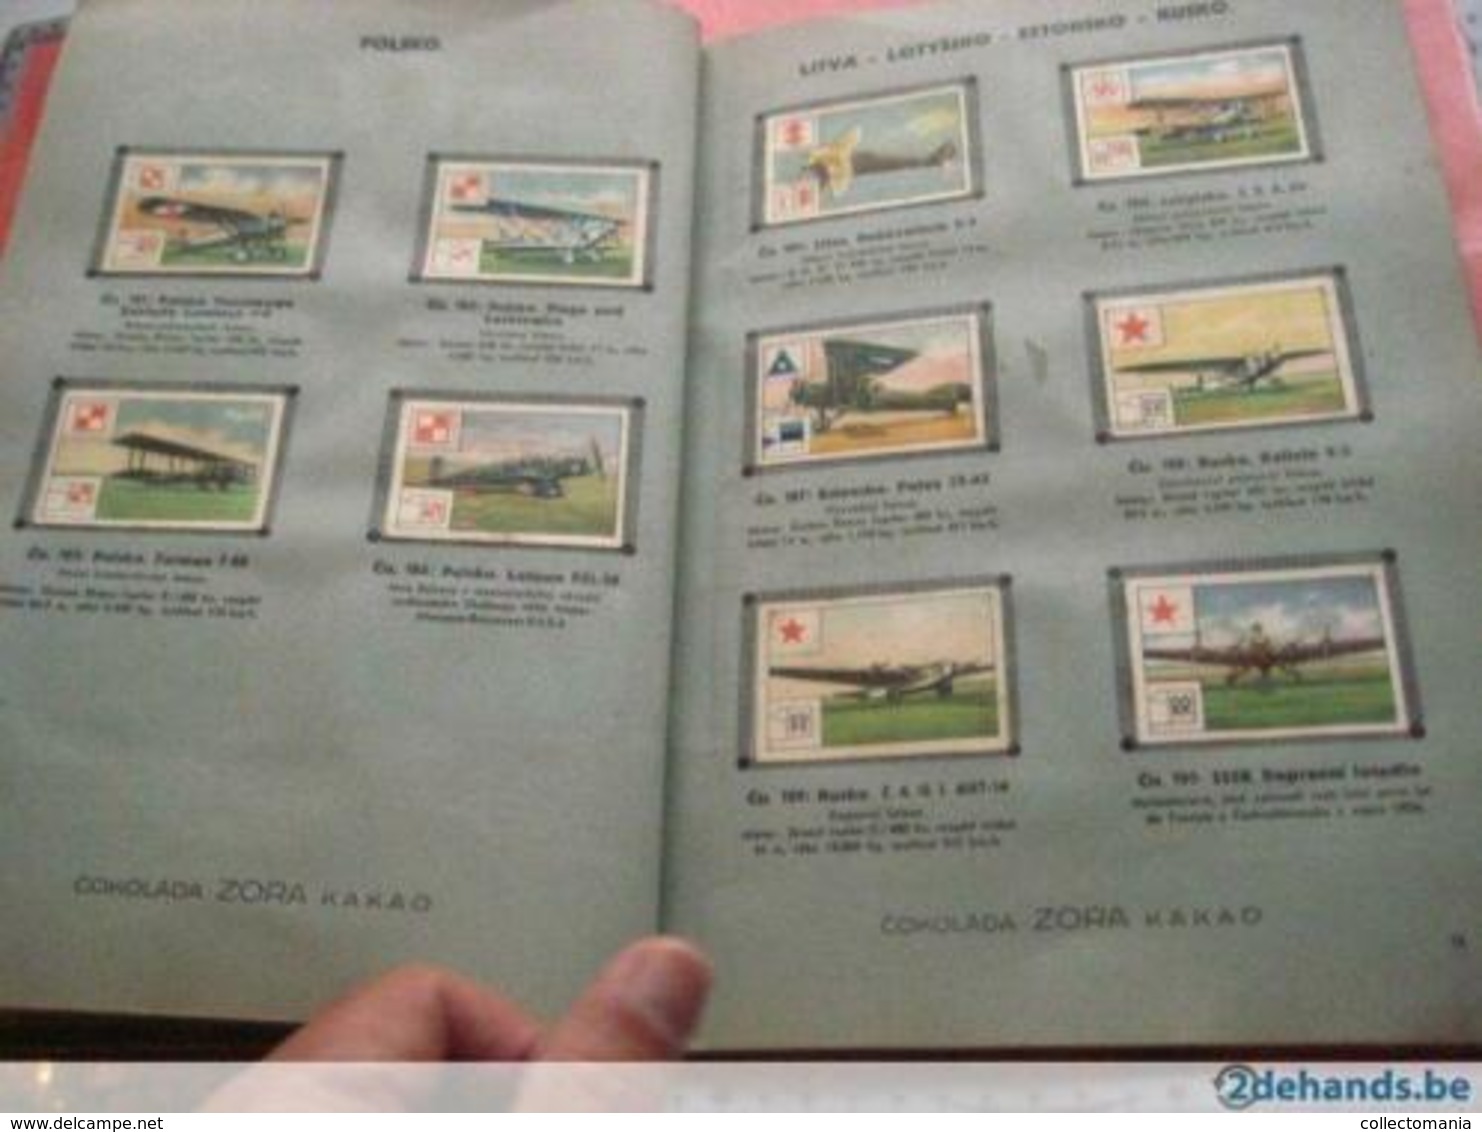 1  chocolate album, first avion  pionier, distributing cards around 1933, kakao fvliegtuigen 2 wings RARE PUB. Zora